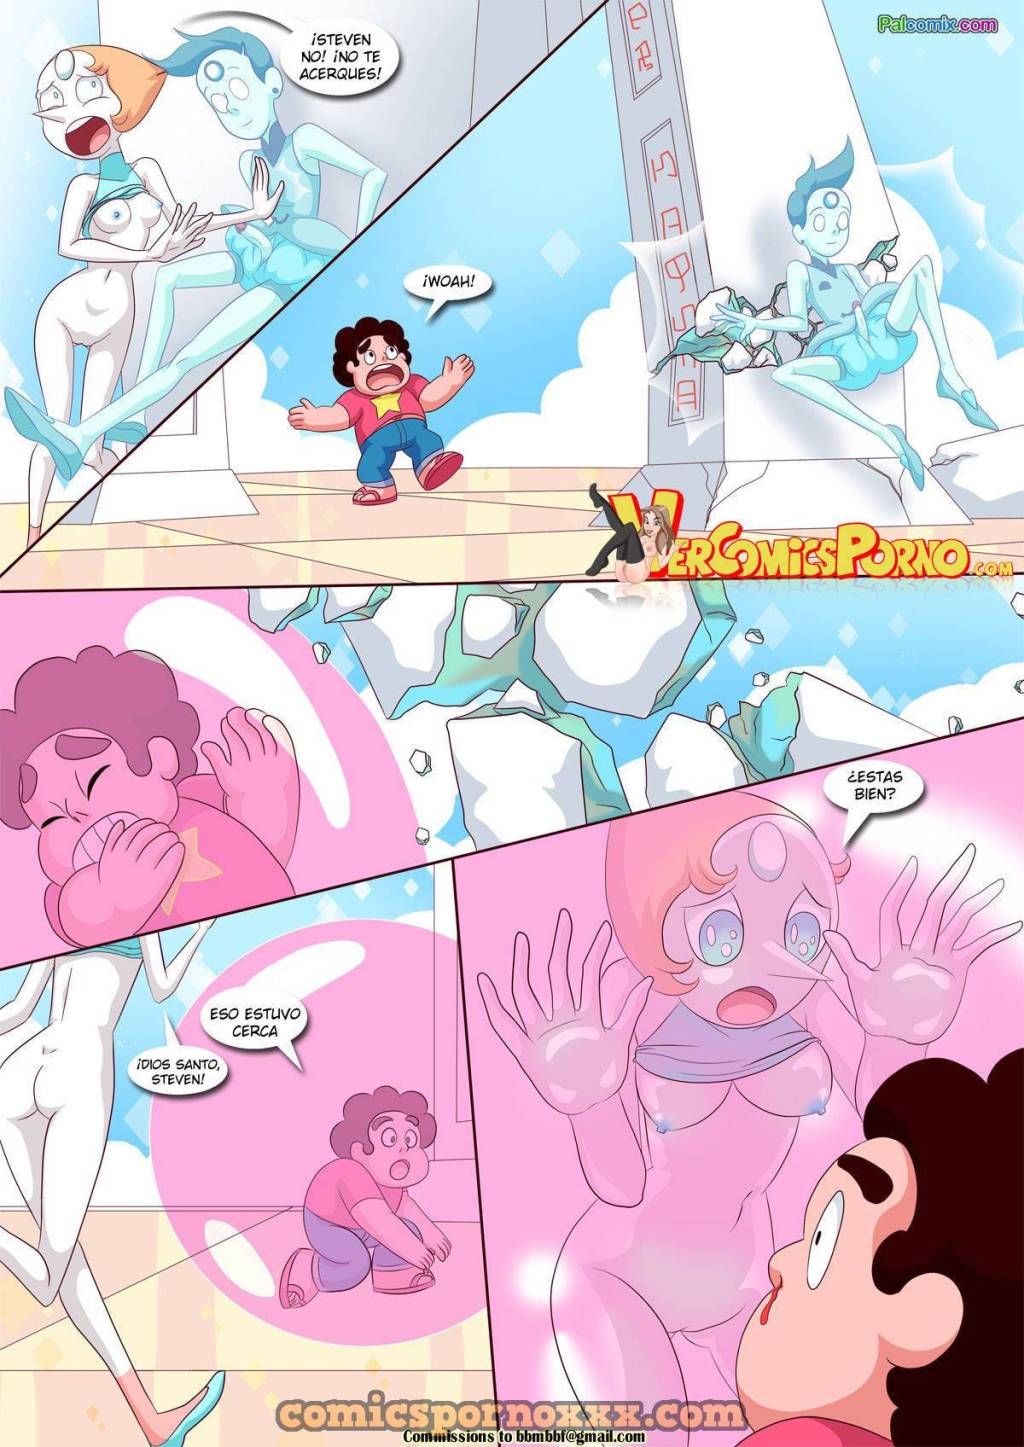 Rose's Memories (Porno de Steven Universe) - 5 - Comics Porno - Hentai Manga - Cartoon XXX